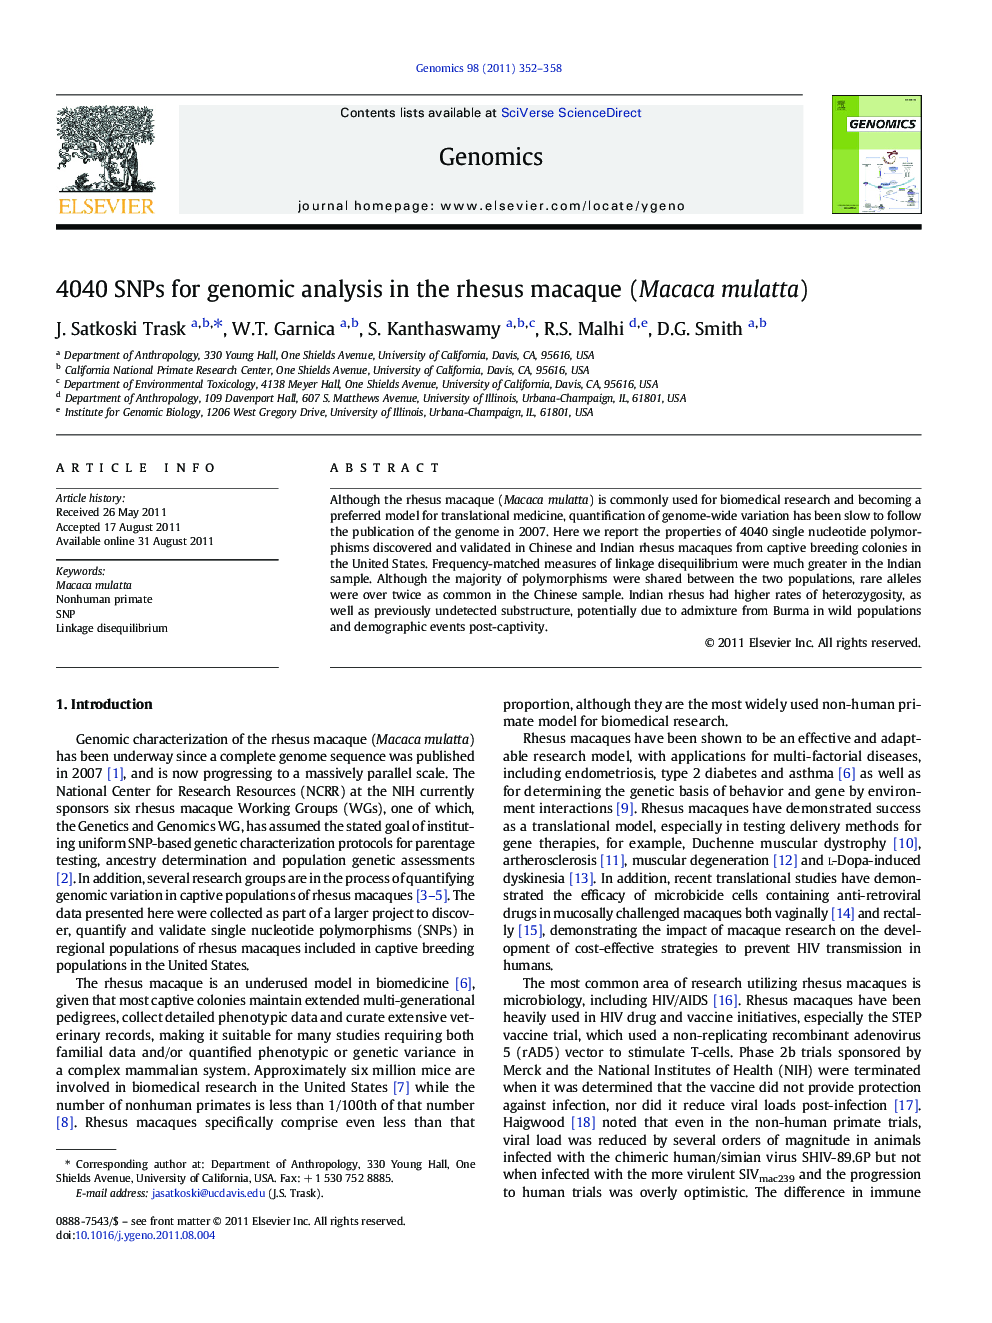 4040 SNPs for genomic analysis in the rhesus macaque (Macaca mulatta)